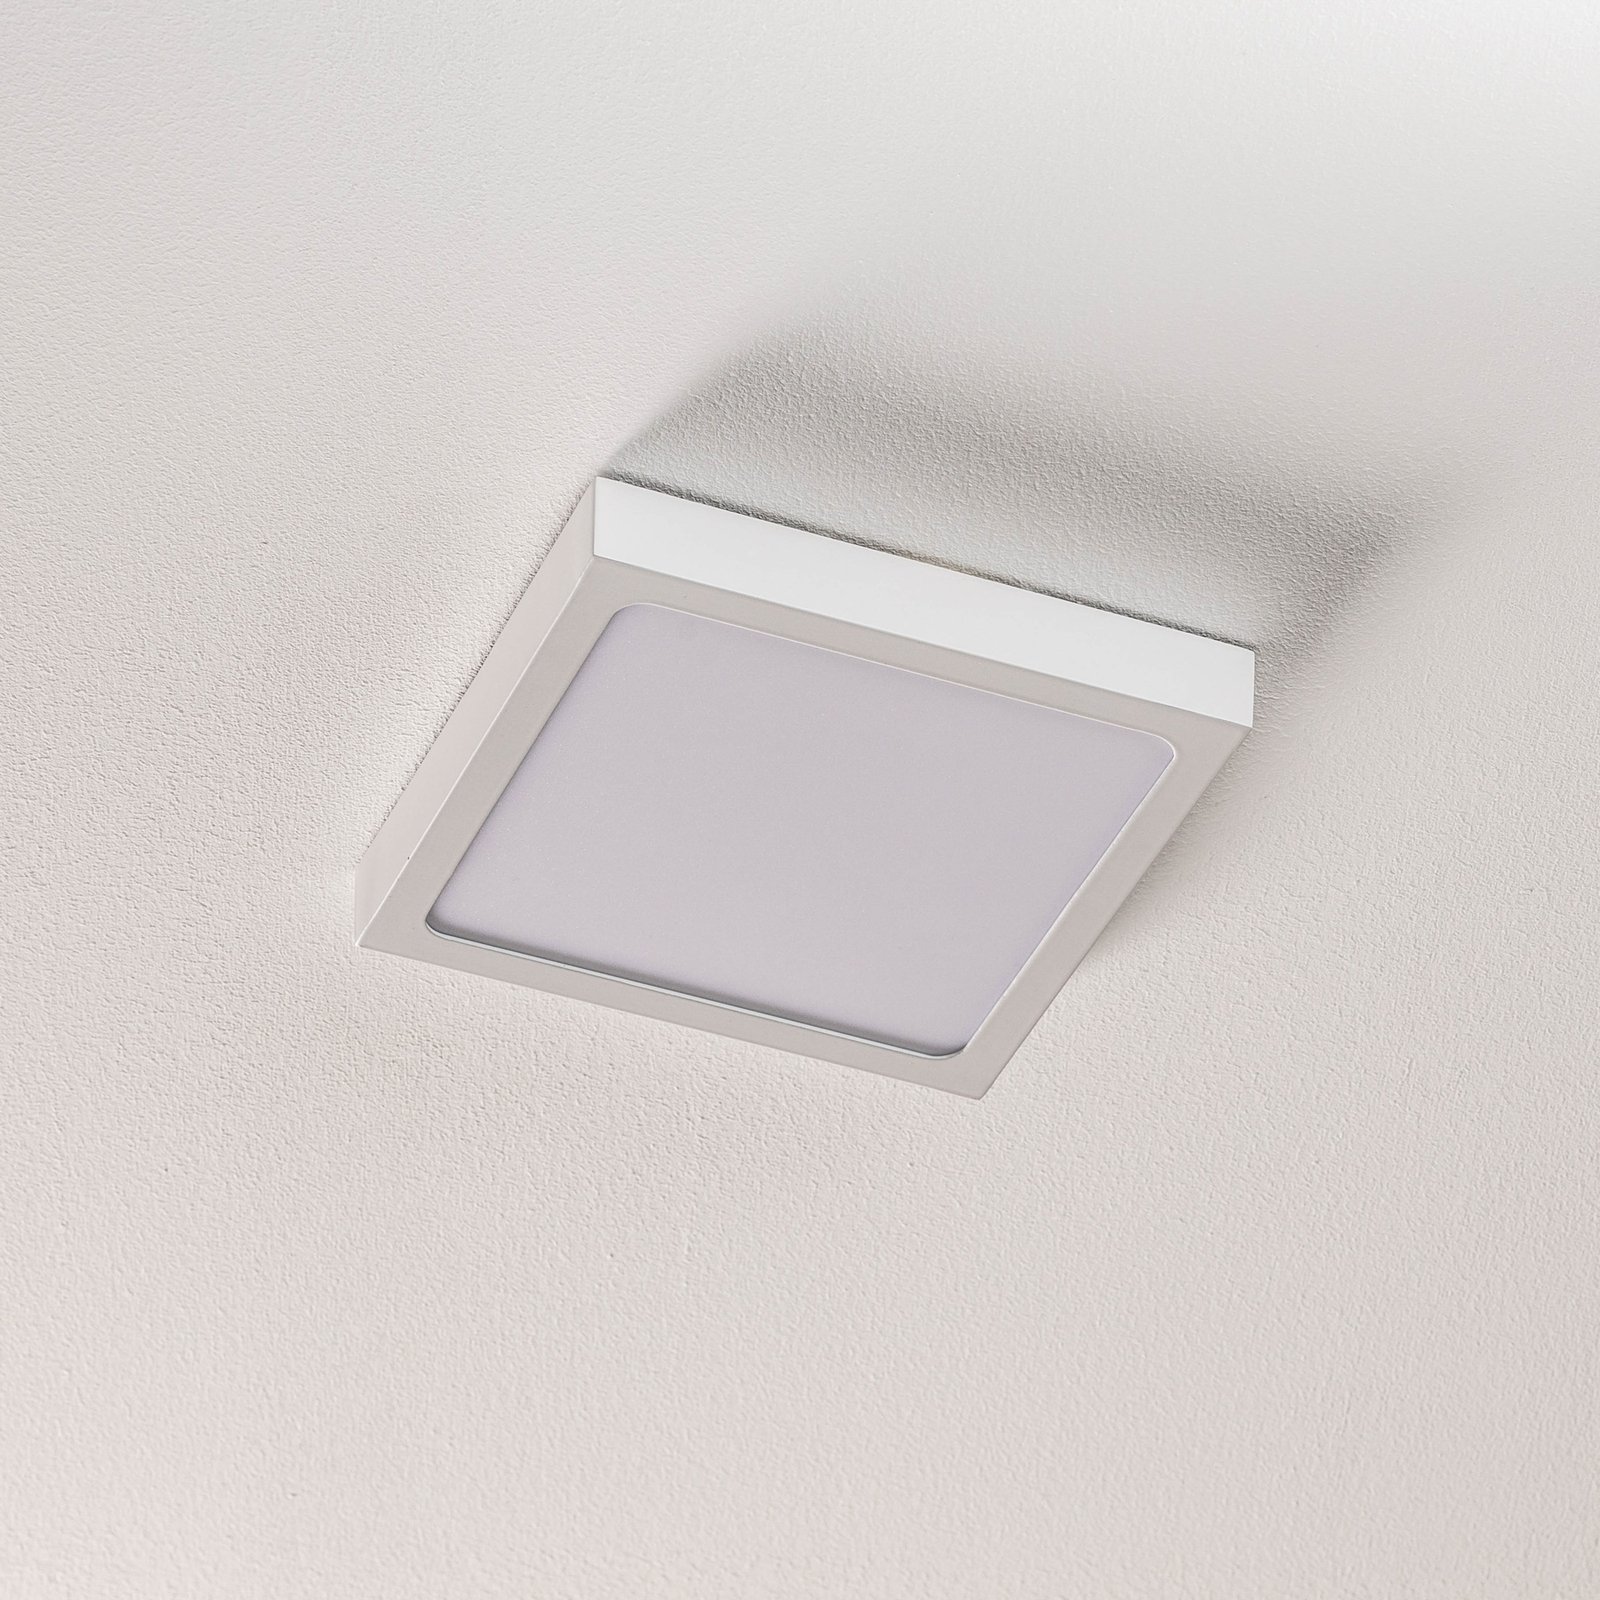 Applique LED Vika quadrata, bianco, 18x18cm